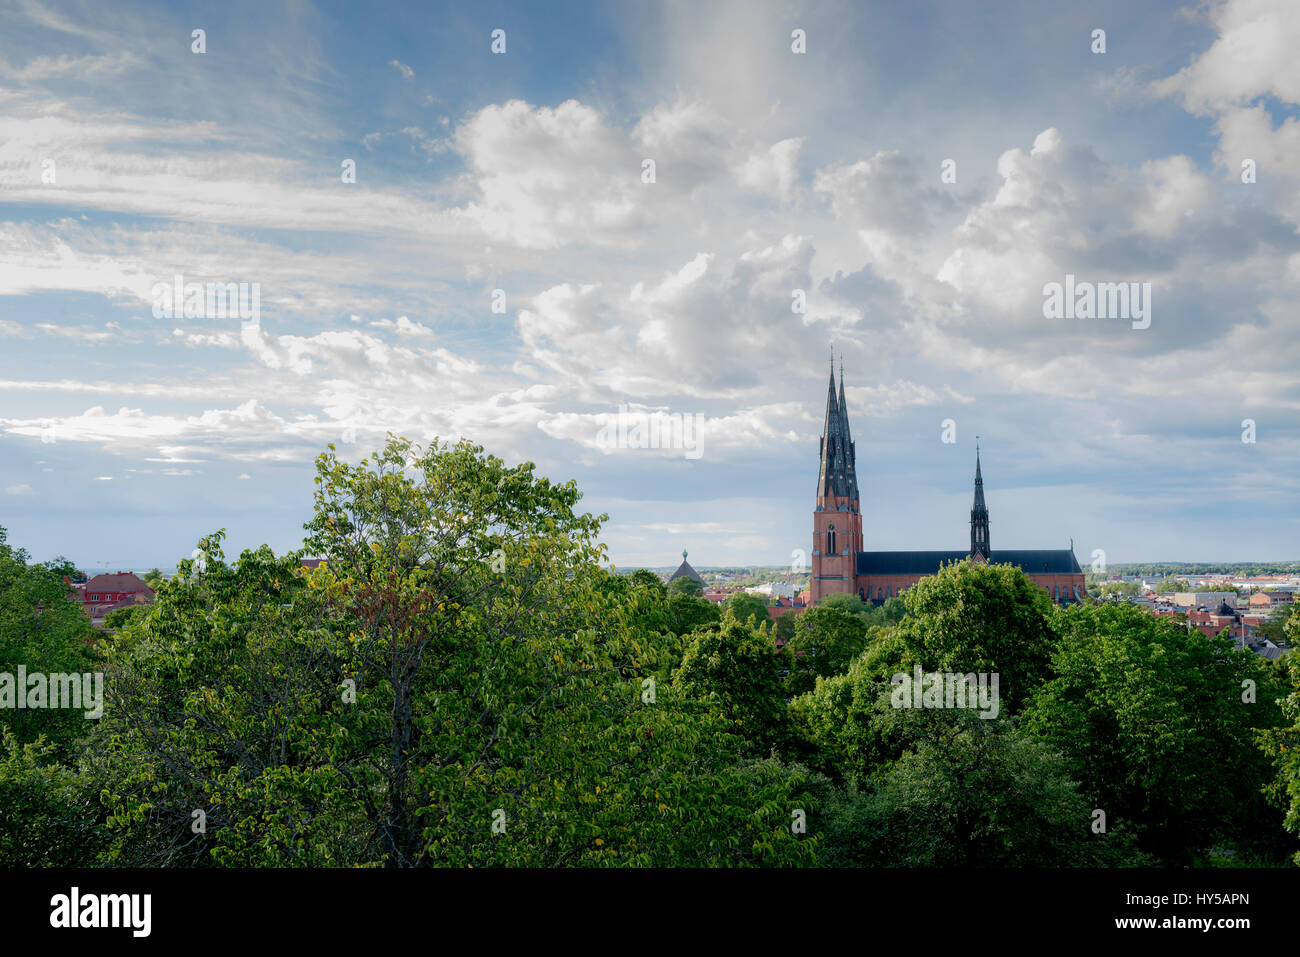 Sweden, Uppland, Uppsala, Uppsala Cathedral tower over trees Stock Photo